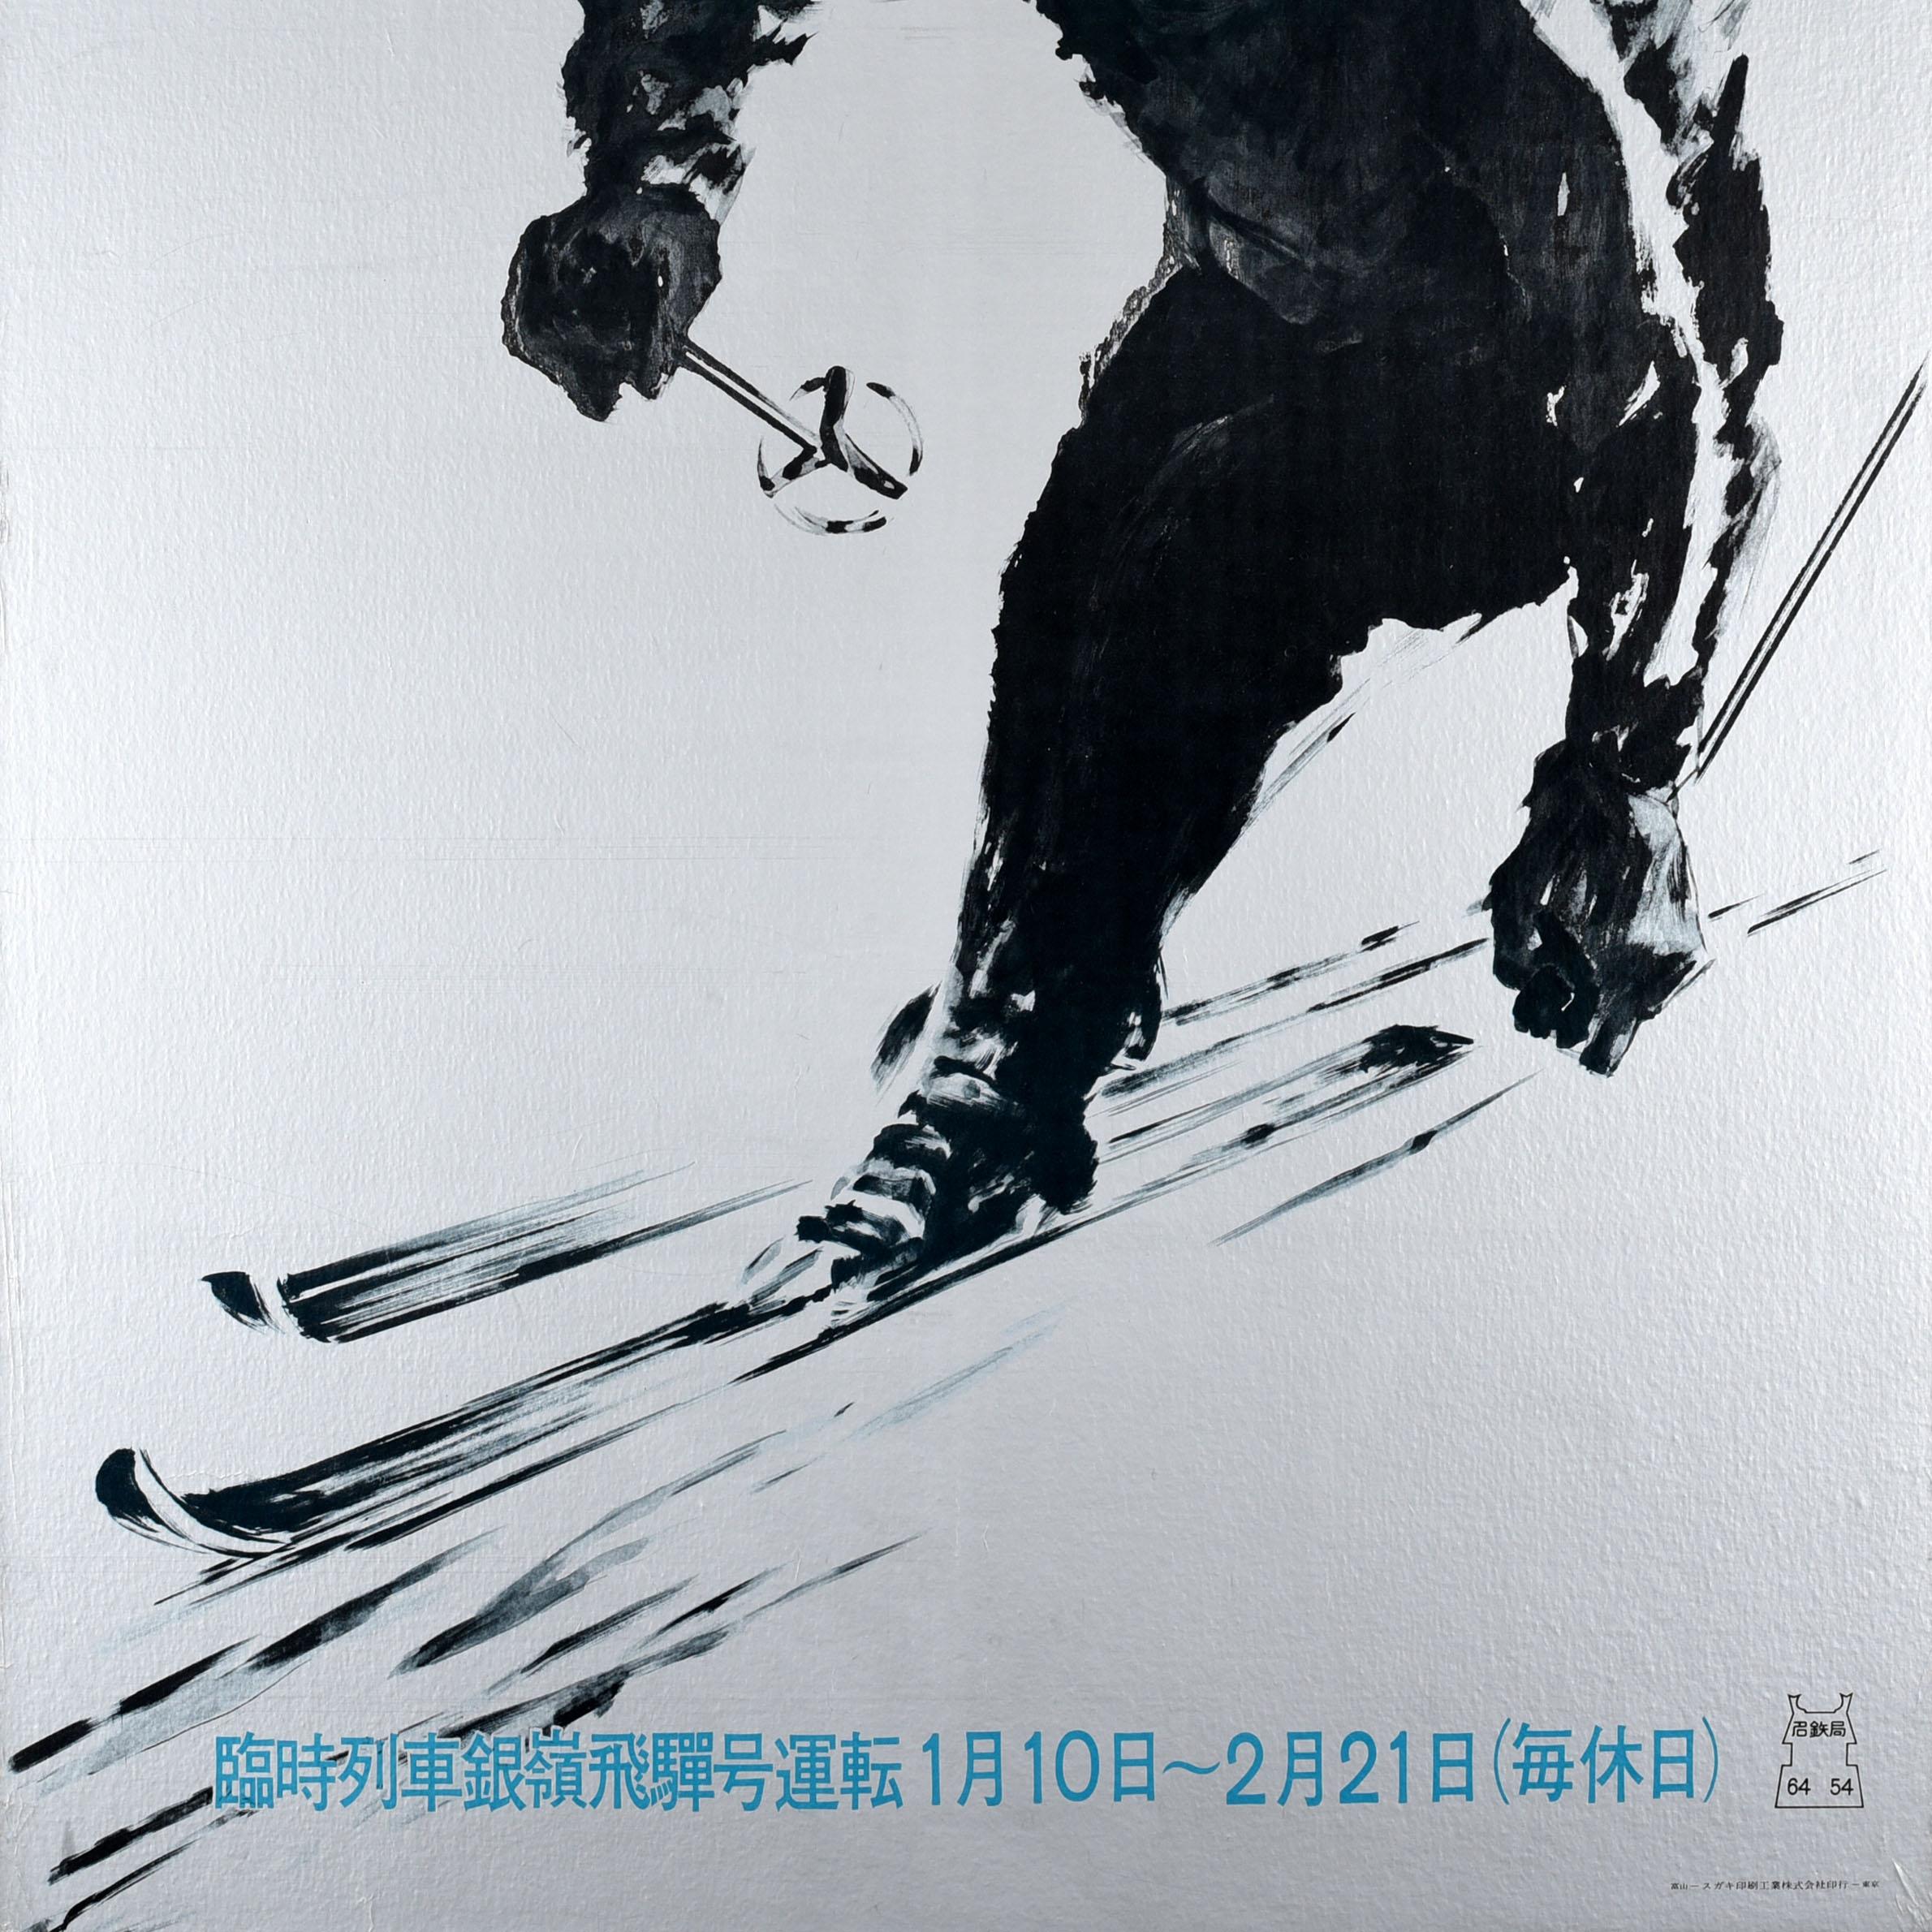 Japanese Original Vintage Winter Sport Travel Poster Ski Japan Harayama Hida Takayama For Sale